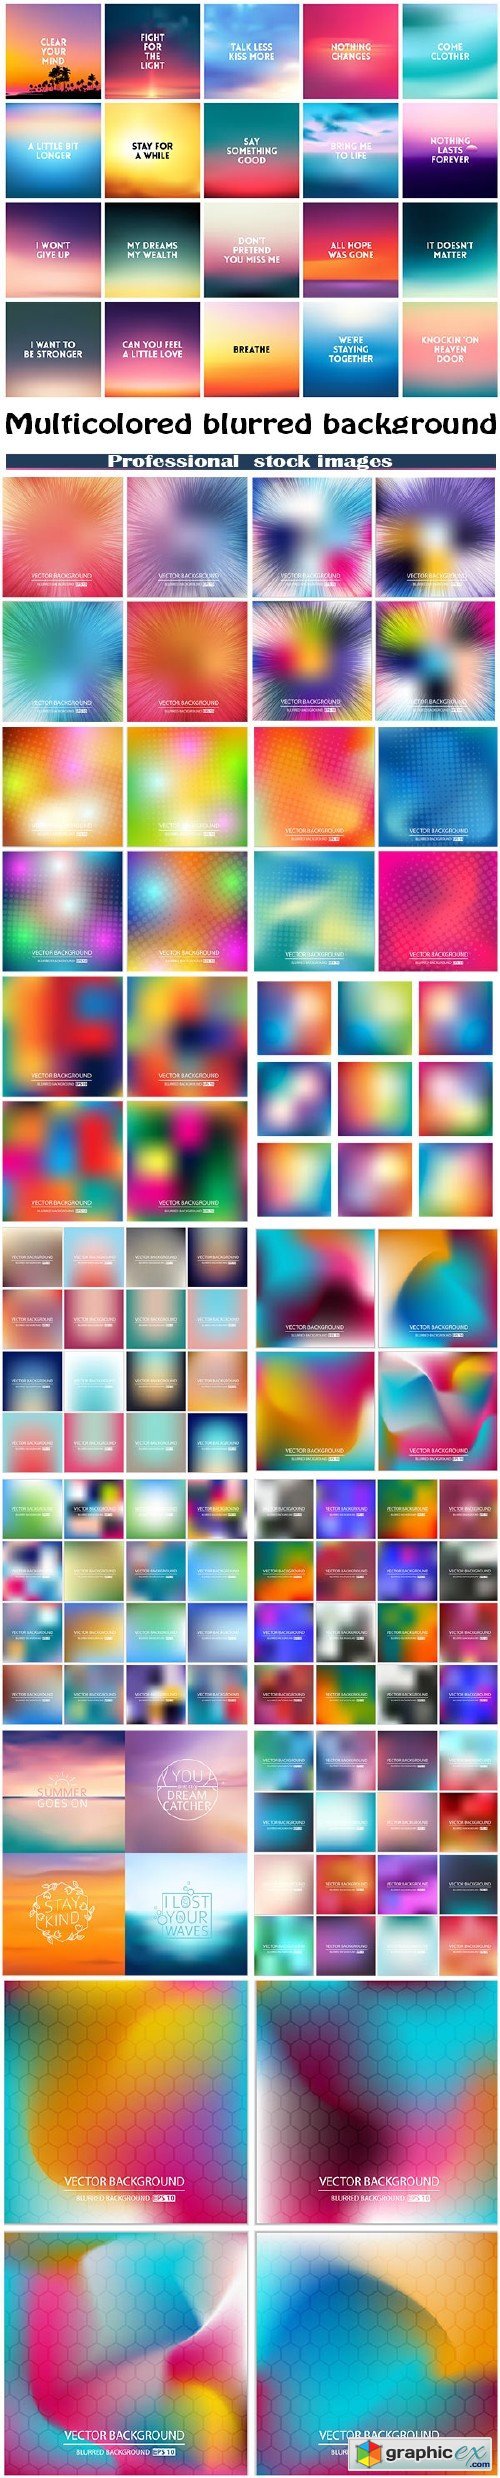 Multicolored blurred background set